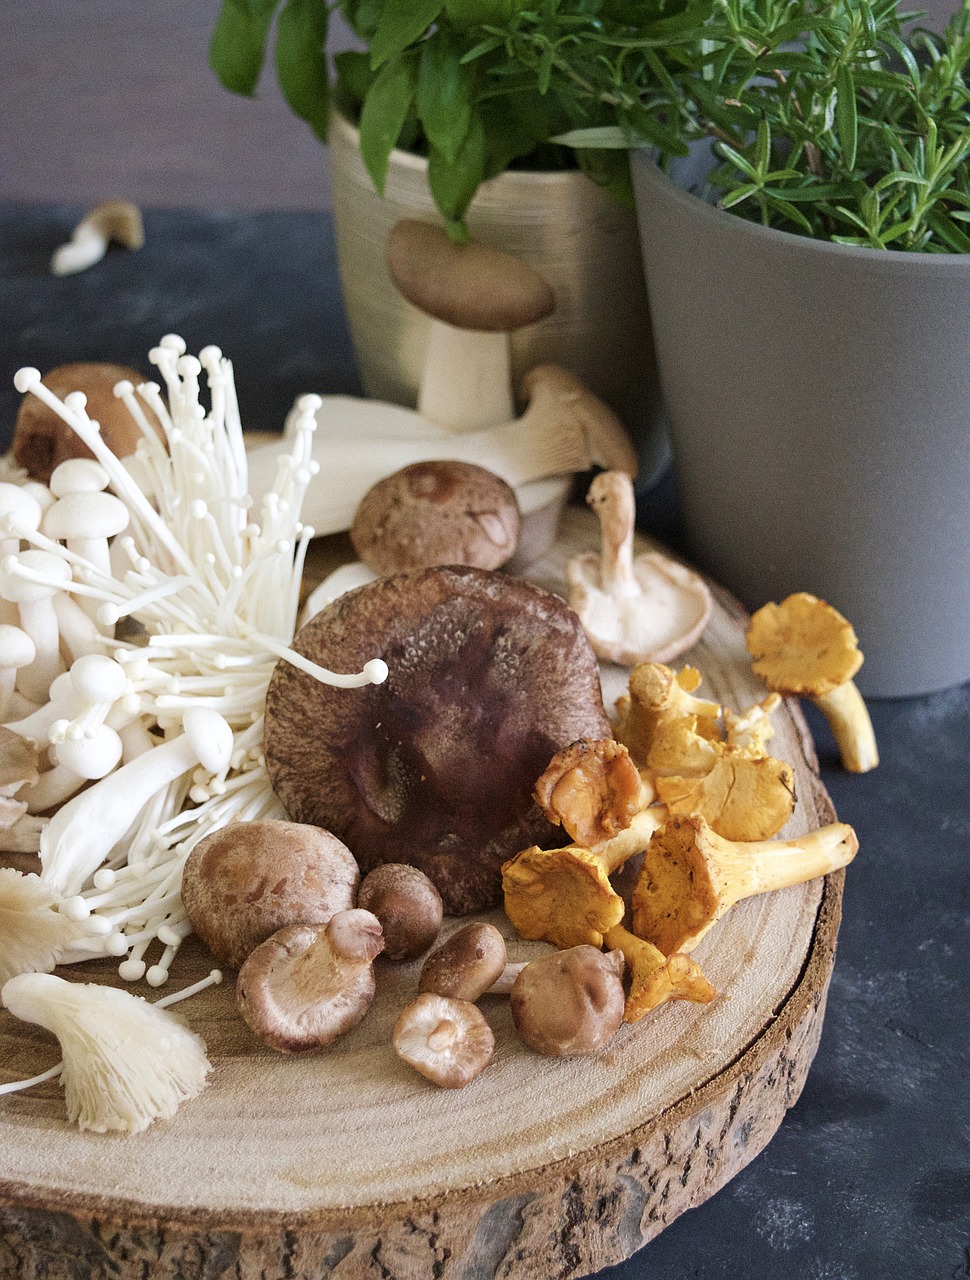 The health benefits of mushrooms